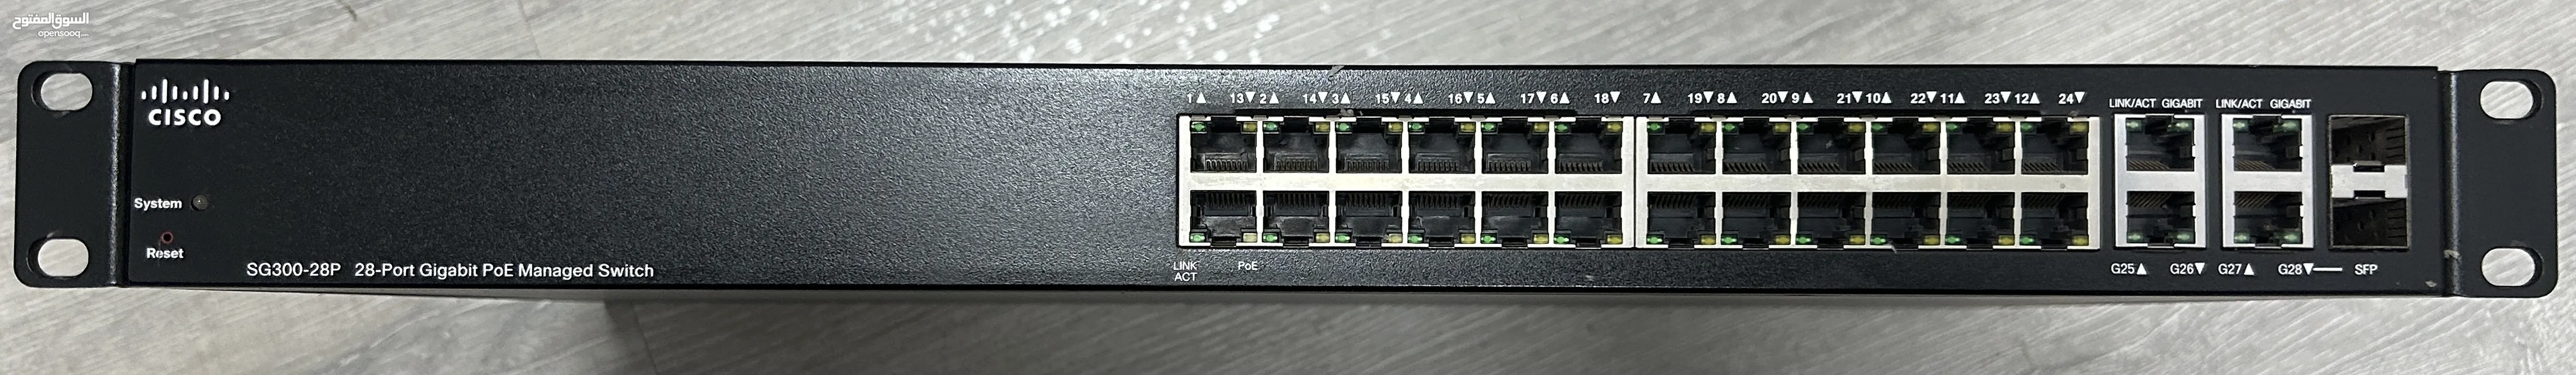 Cisco switch SG300-28P POE Managed